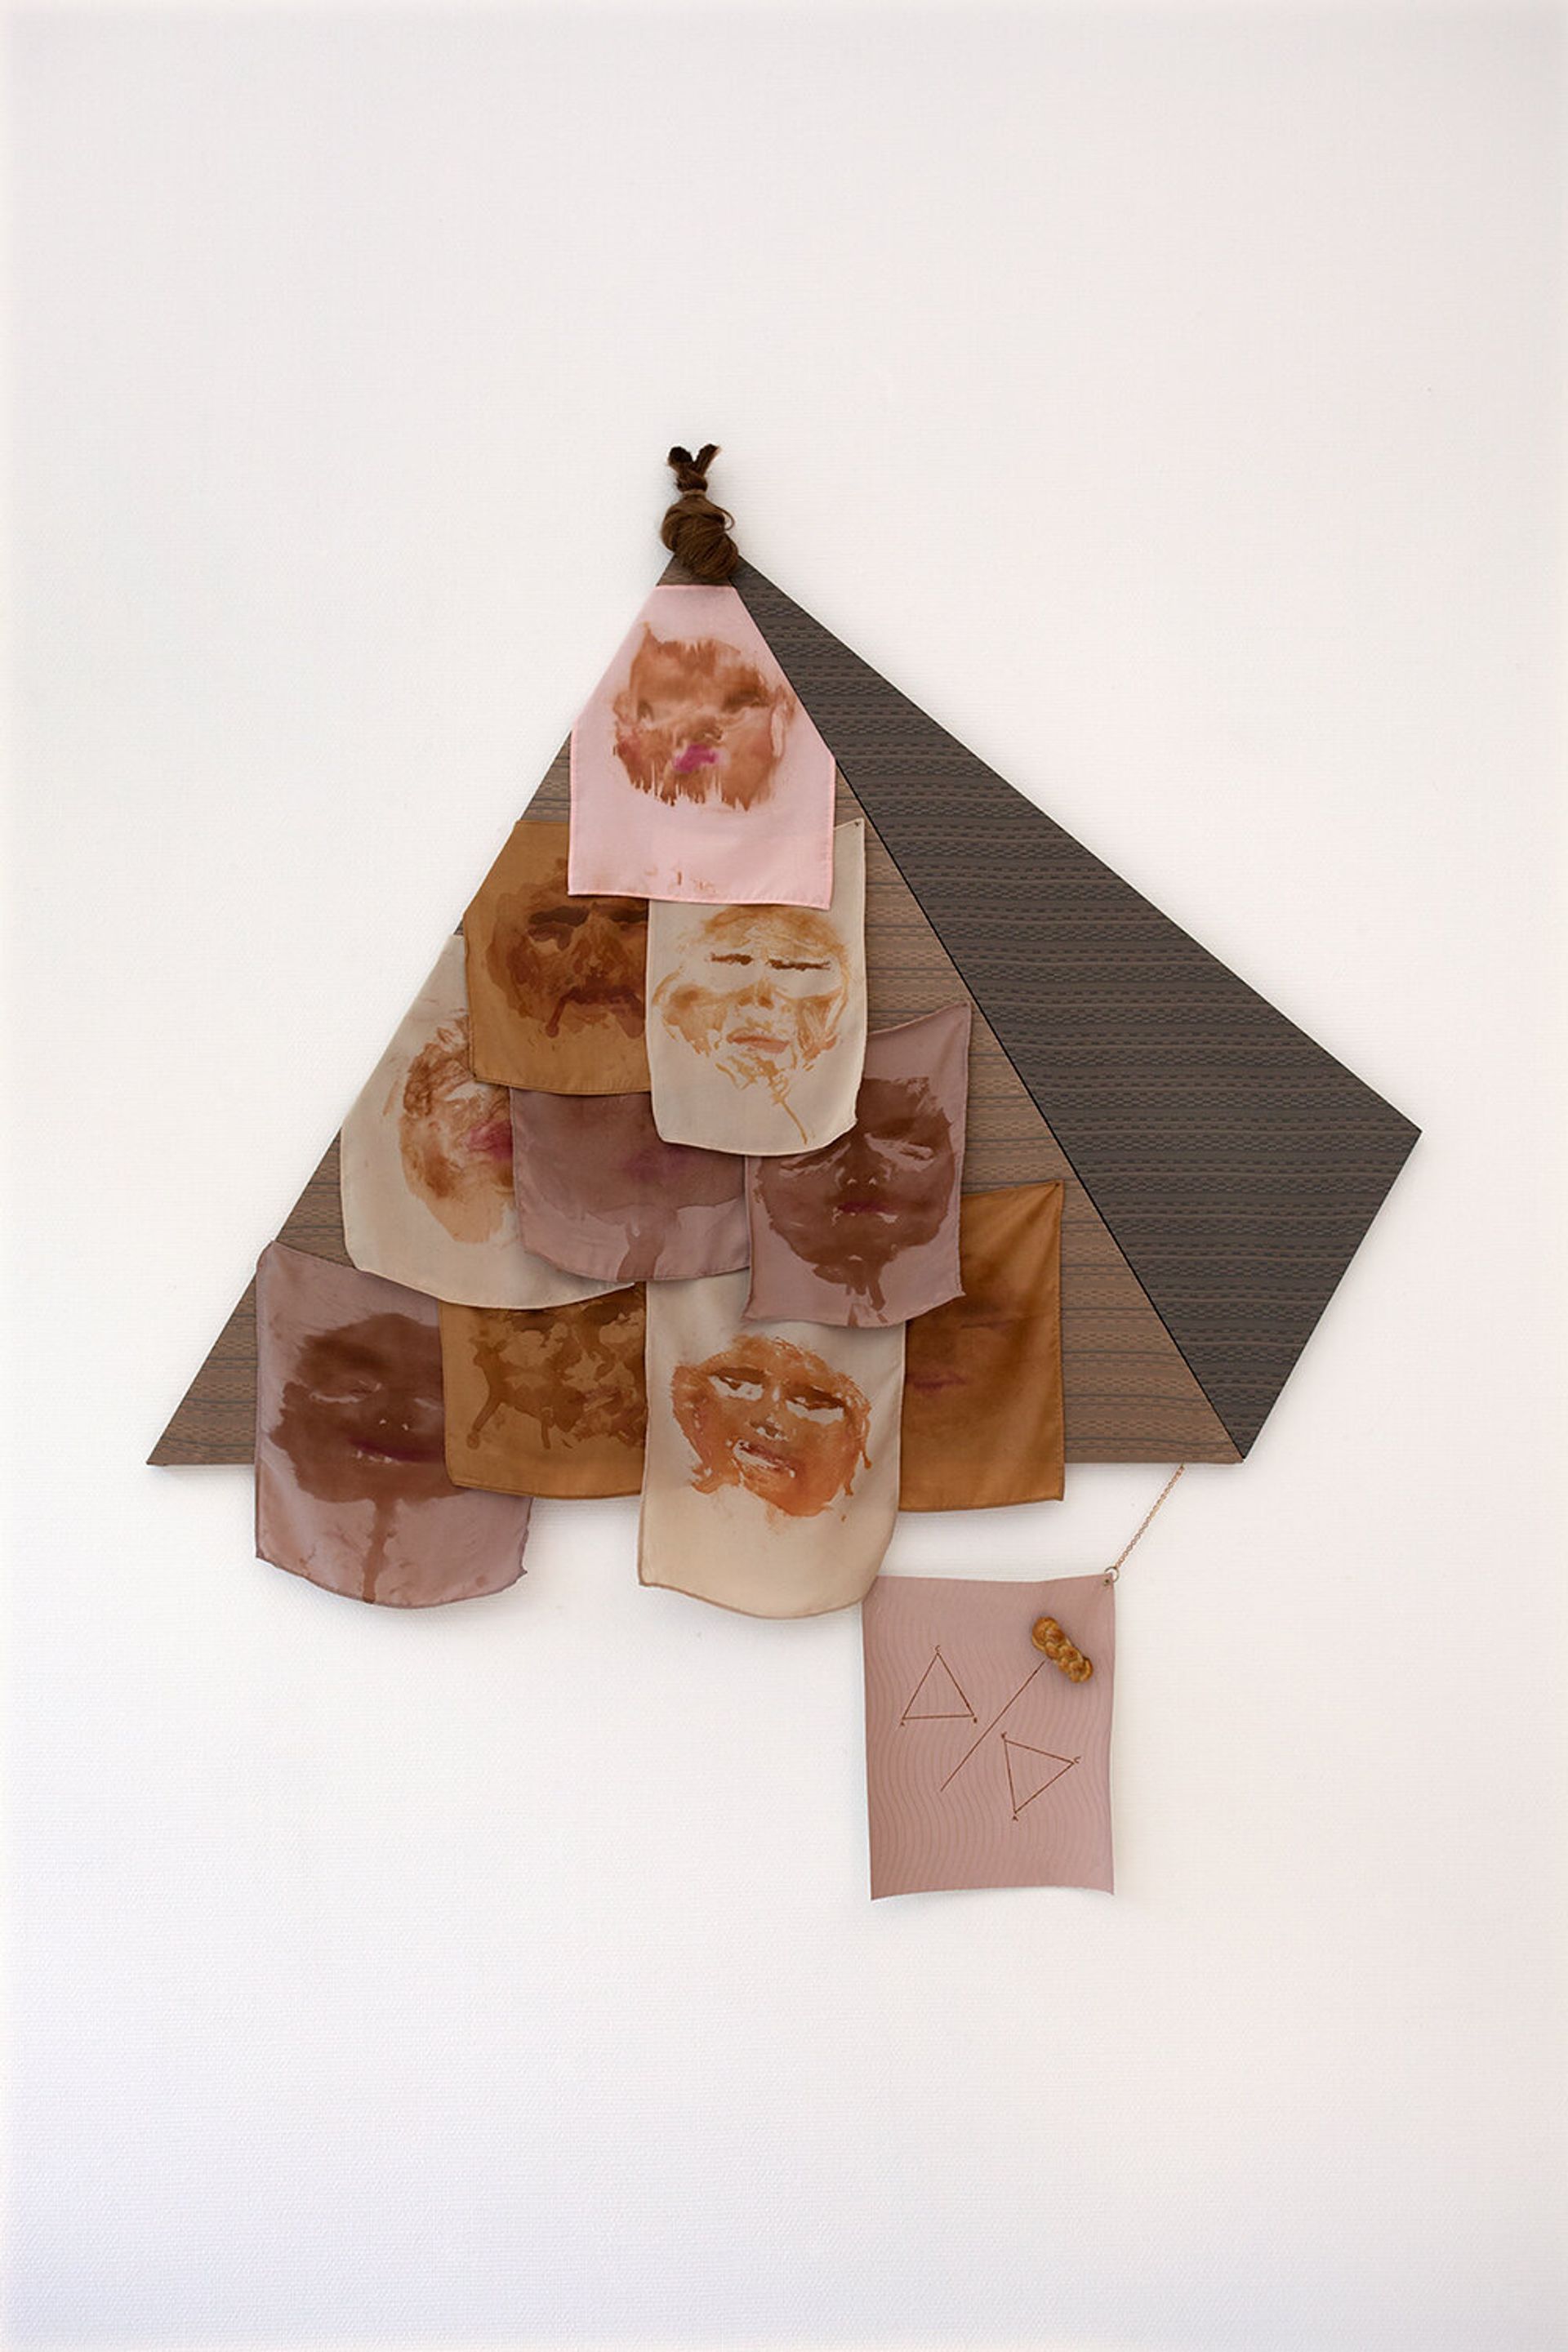 Ana Navas, Pyramid, 2018, fabric, hair, silk paint, bread, polyester resin, 145 × 155 cm